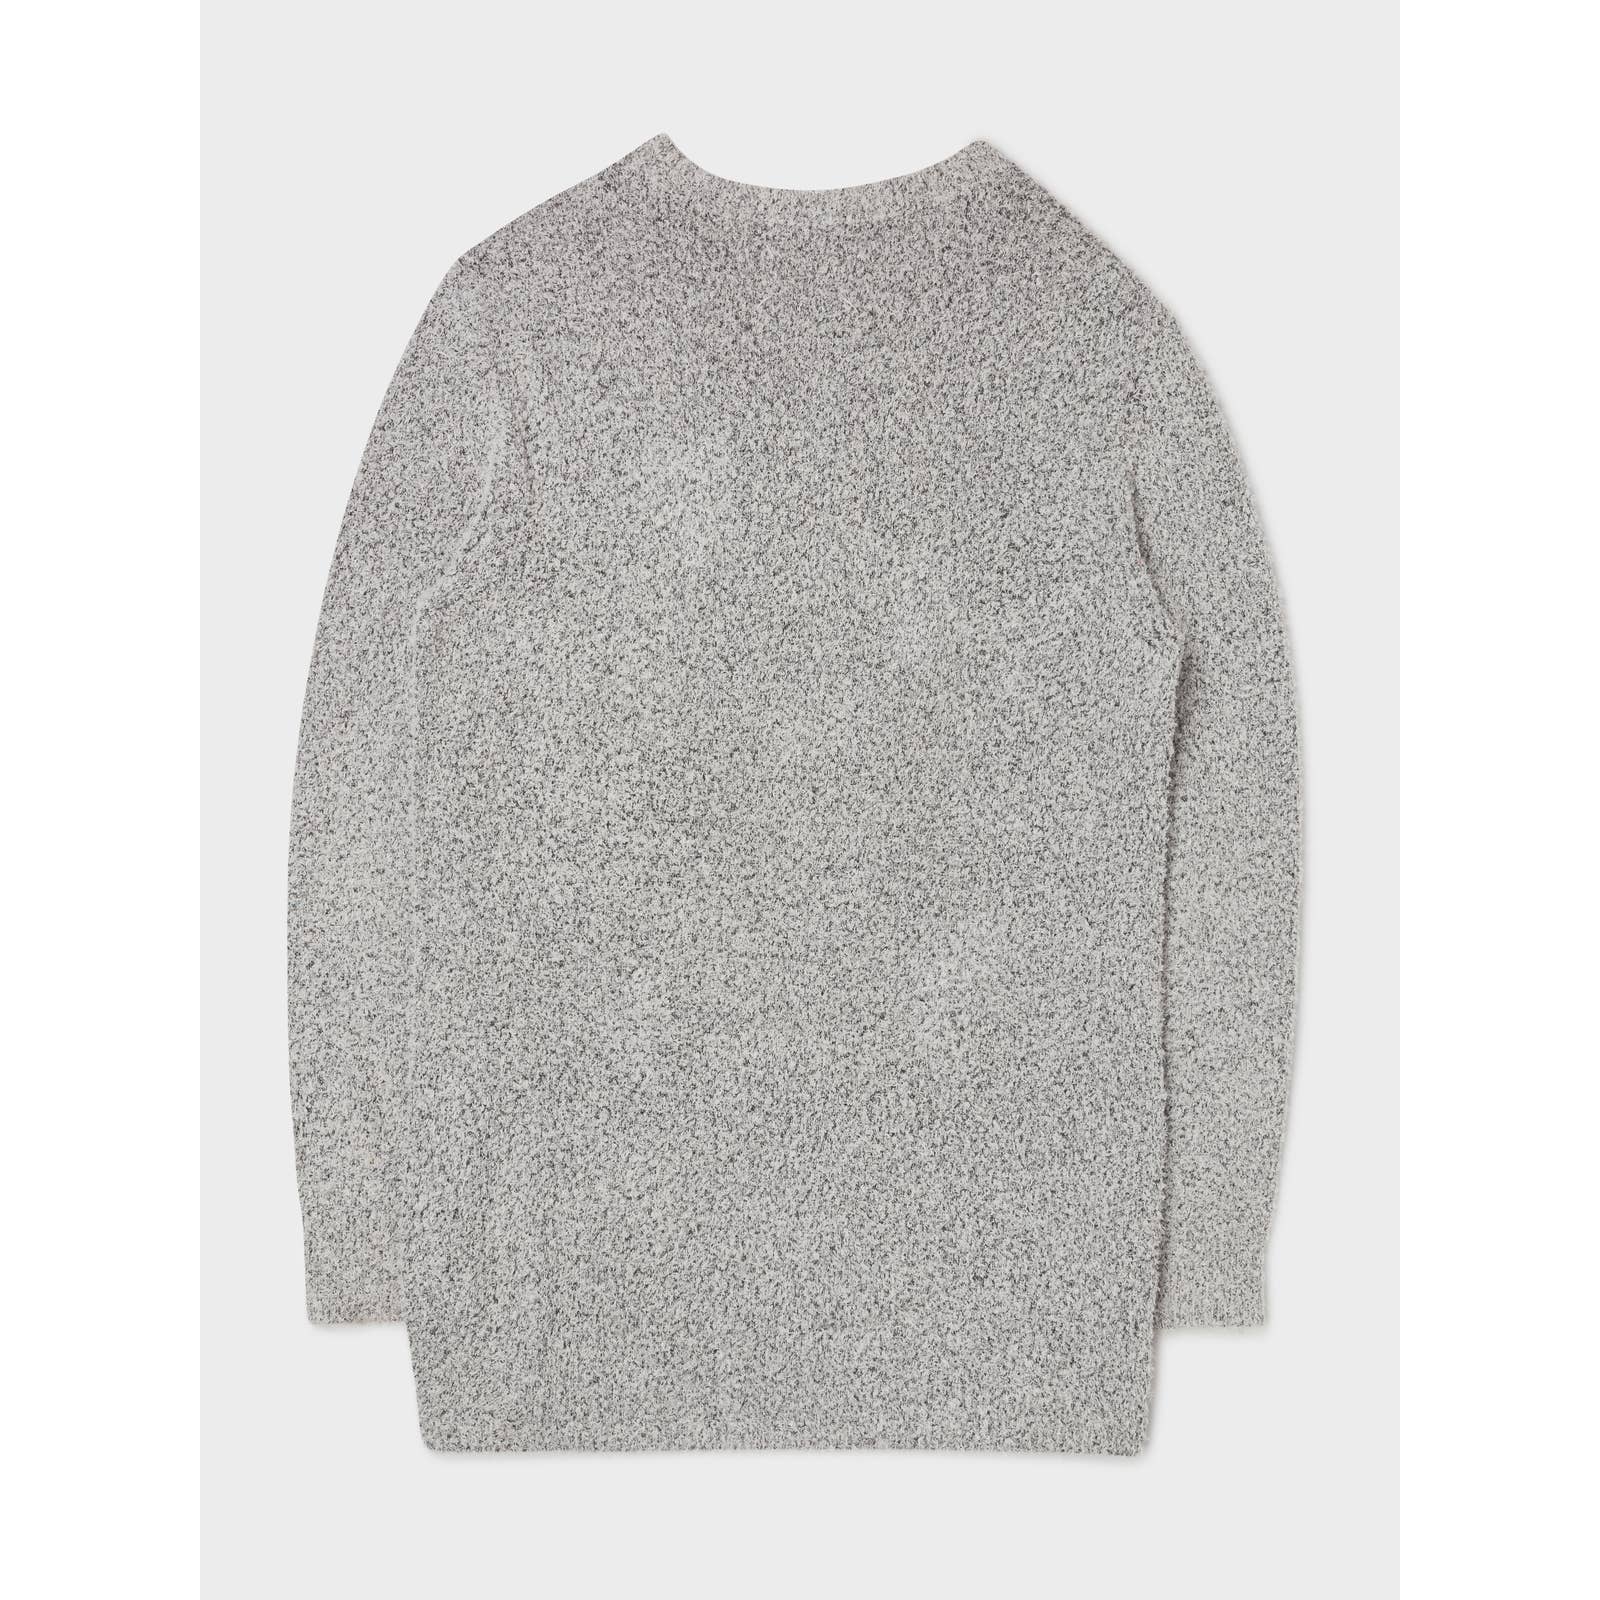 SS15 Boucle Sweater - Groupie